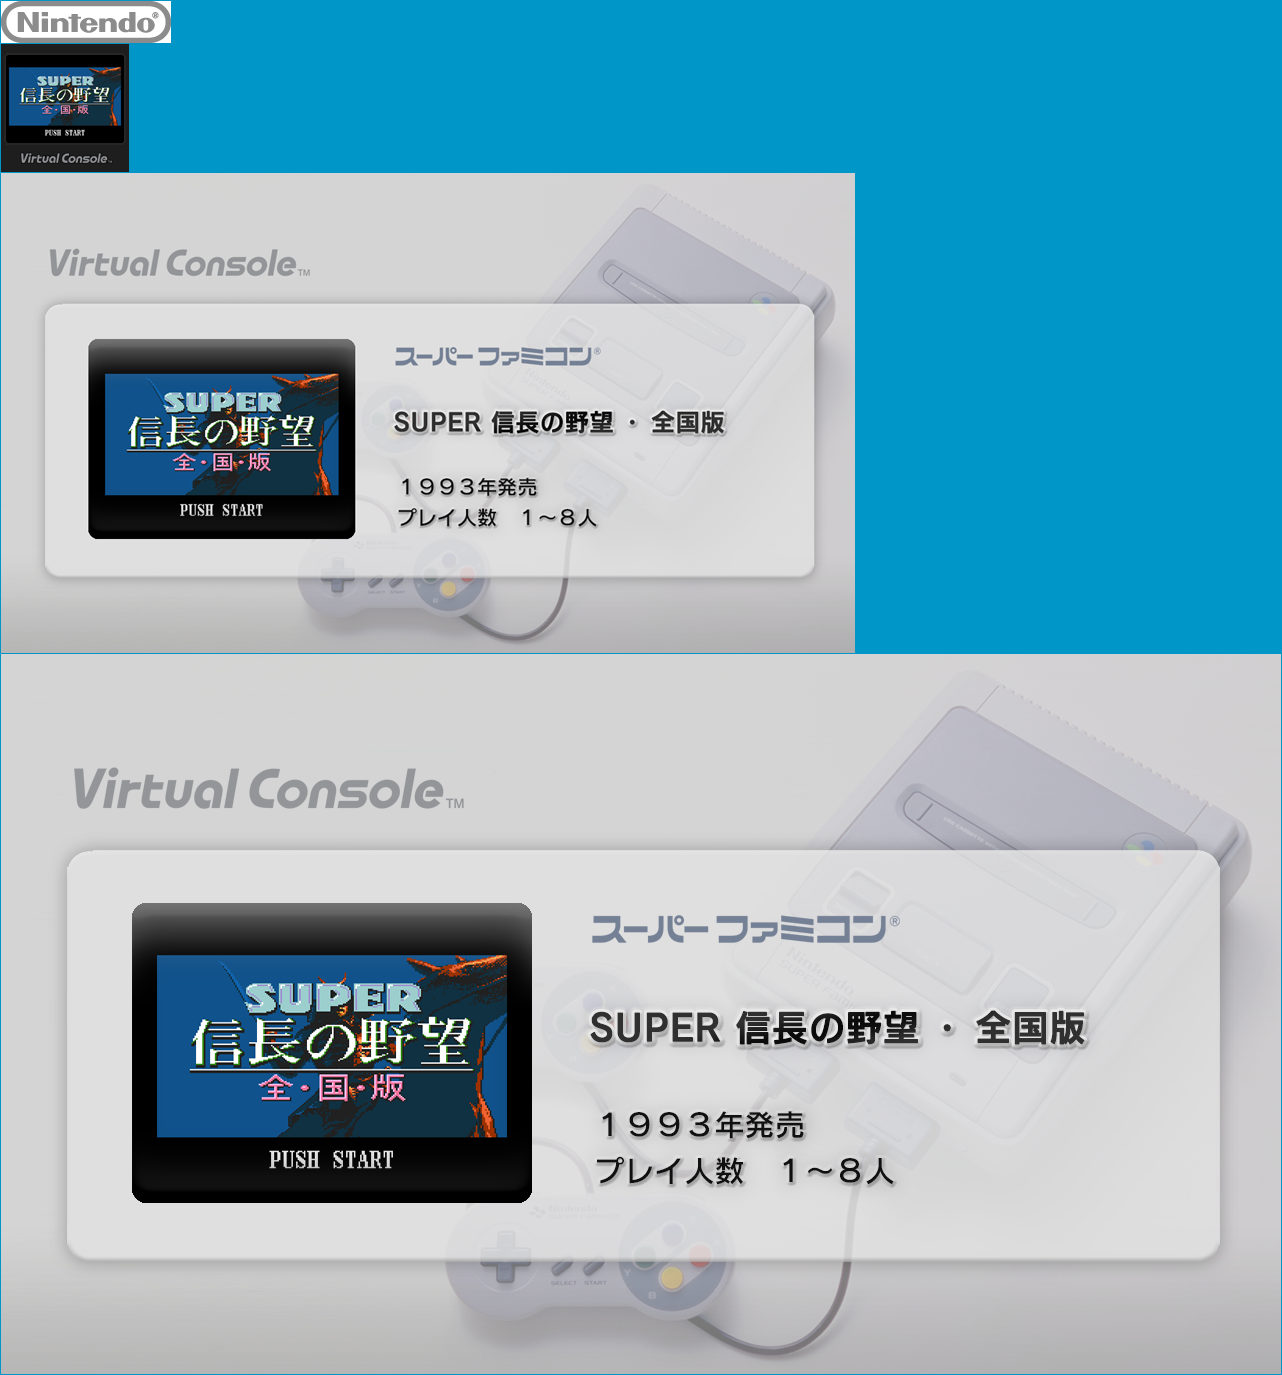 Virtual Console - SUPER Nobunaga no Yabō: Zenkokuban